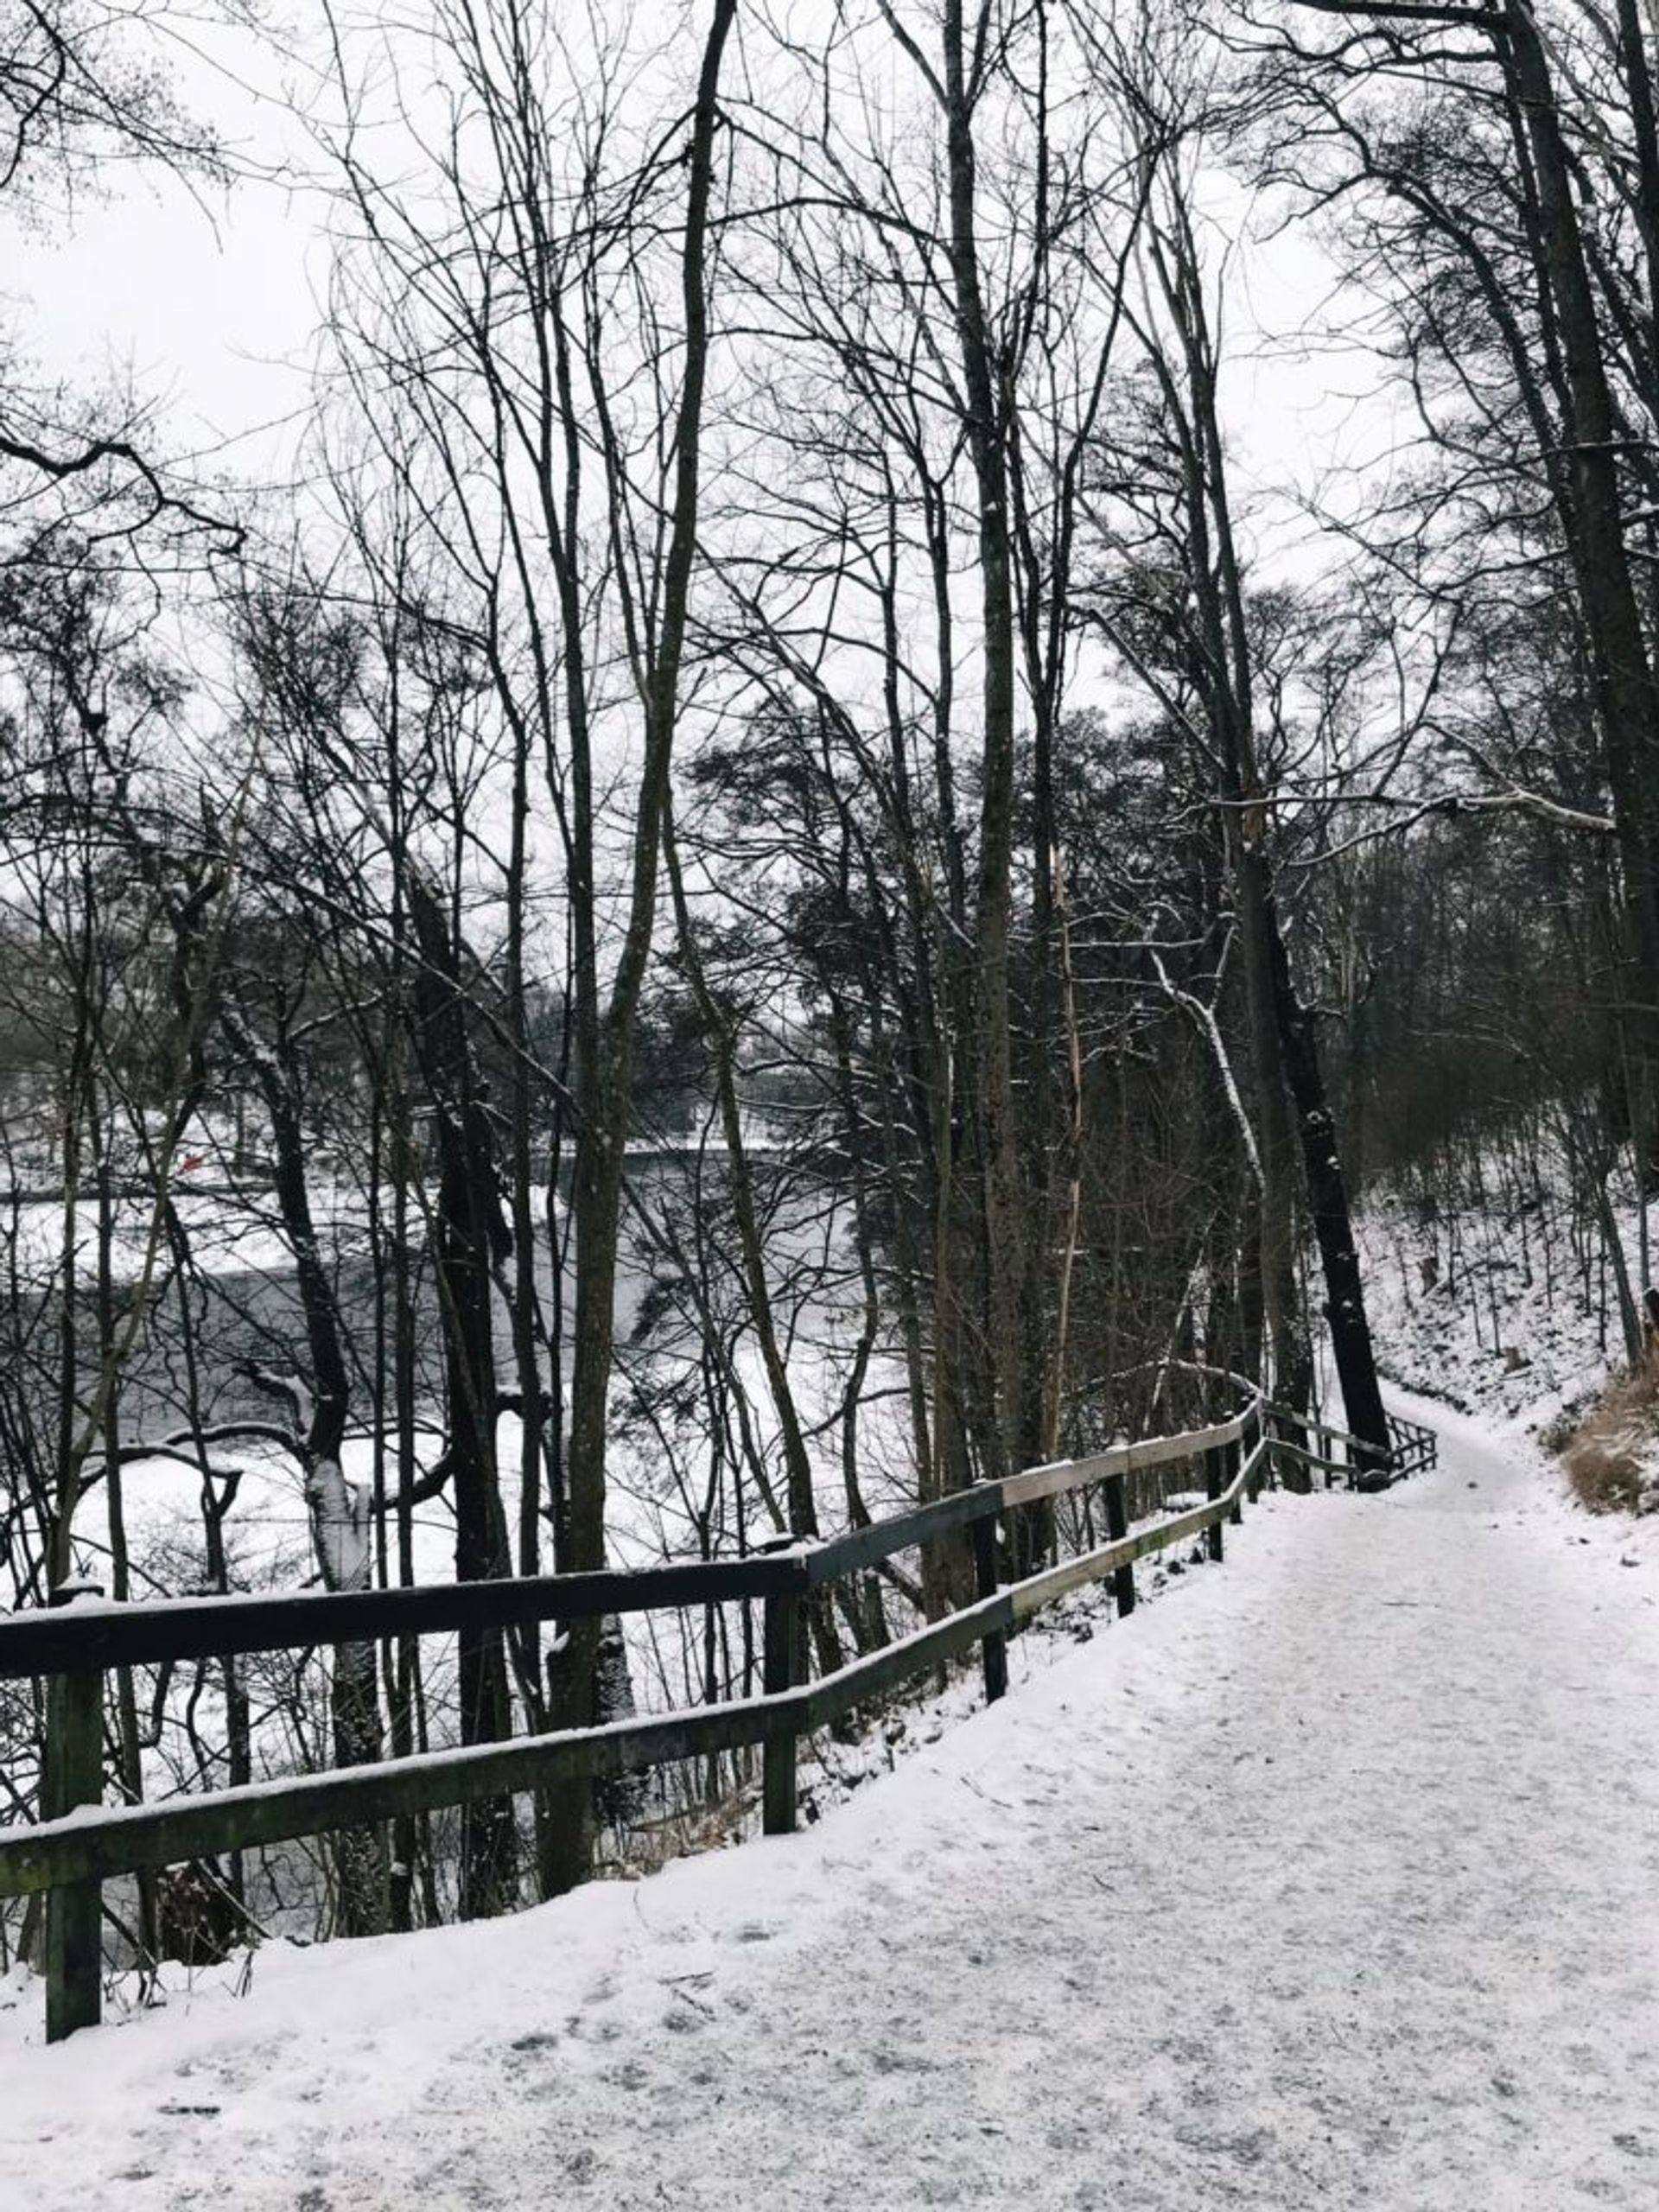 A snowy path through a forest.